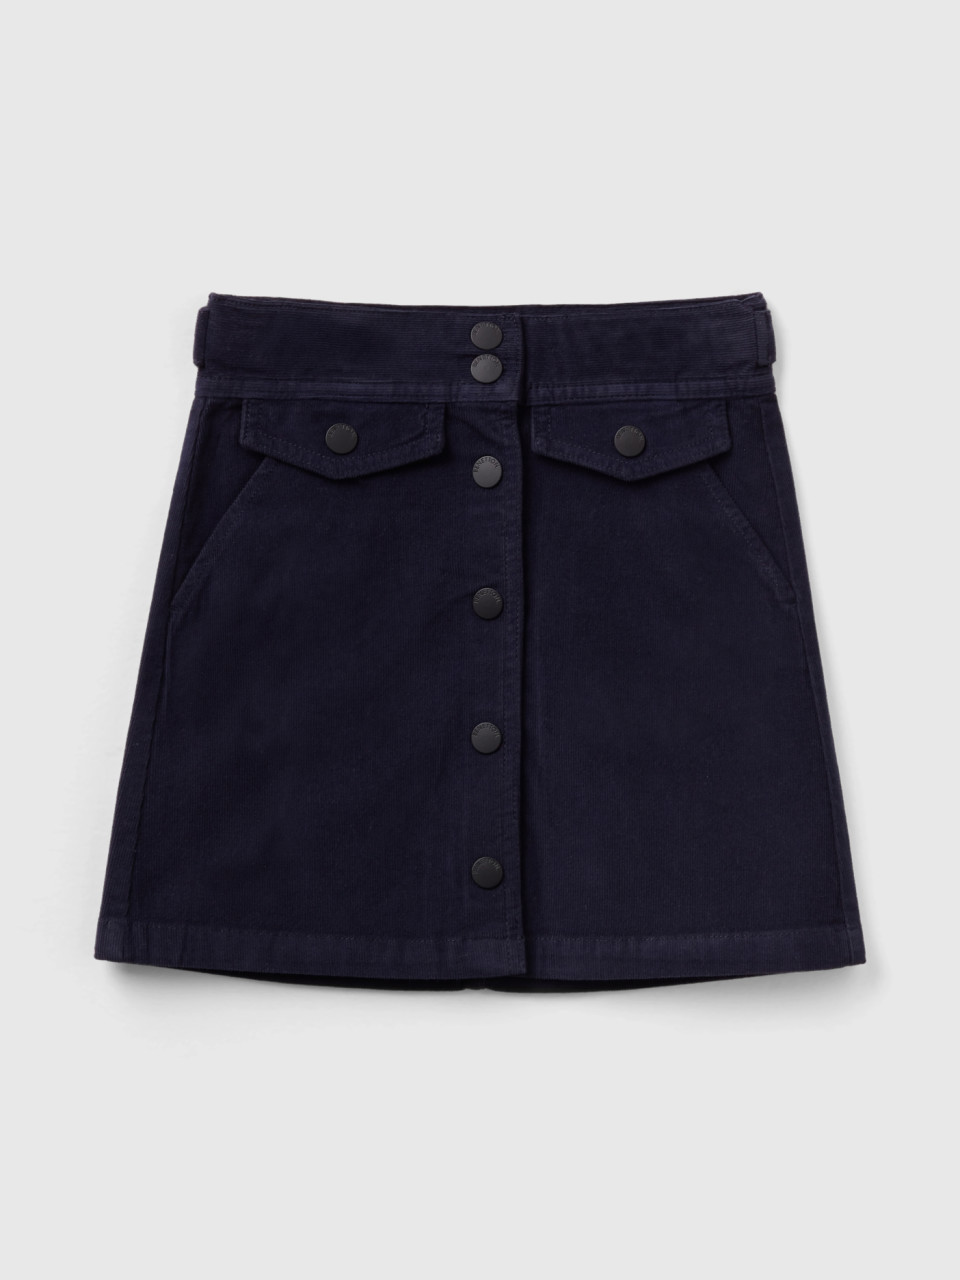 Benetton, Corduroy Skirt, Dark Blue, Kids